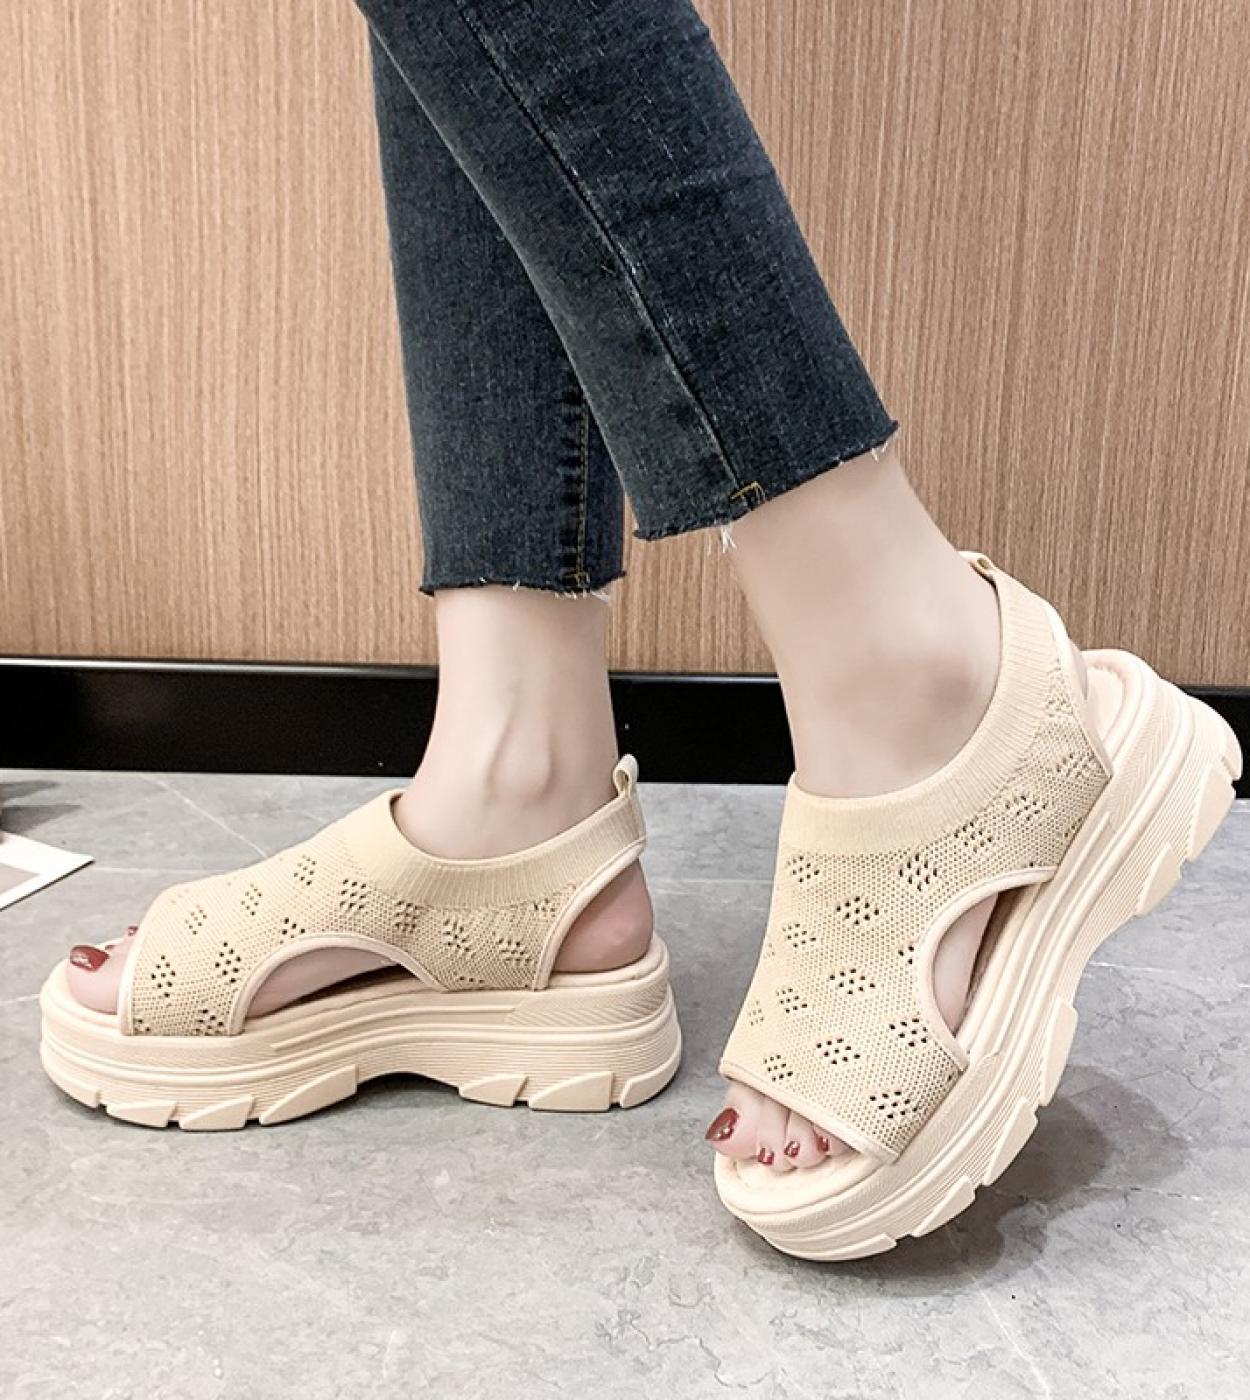 Platform Sandals Women Wedge High Heels Shoes Air Mesh Summer Stretch Cotton Fabric Woman Sandal Plus Szie 40